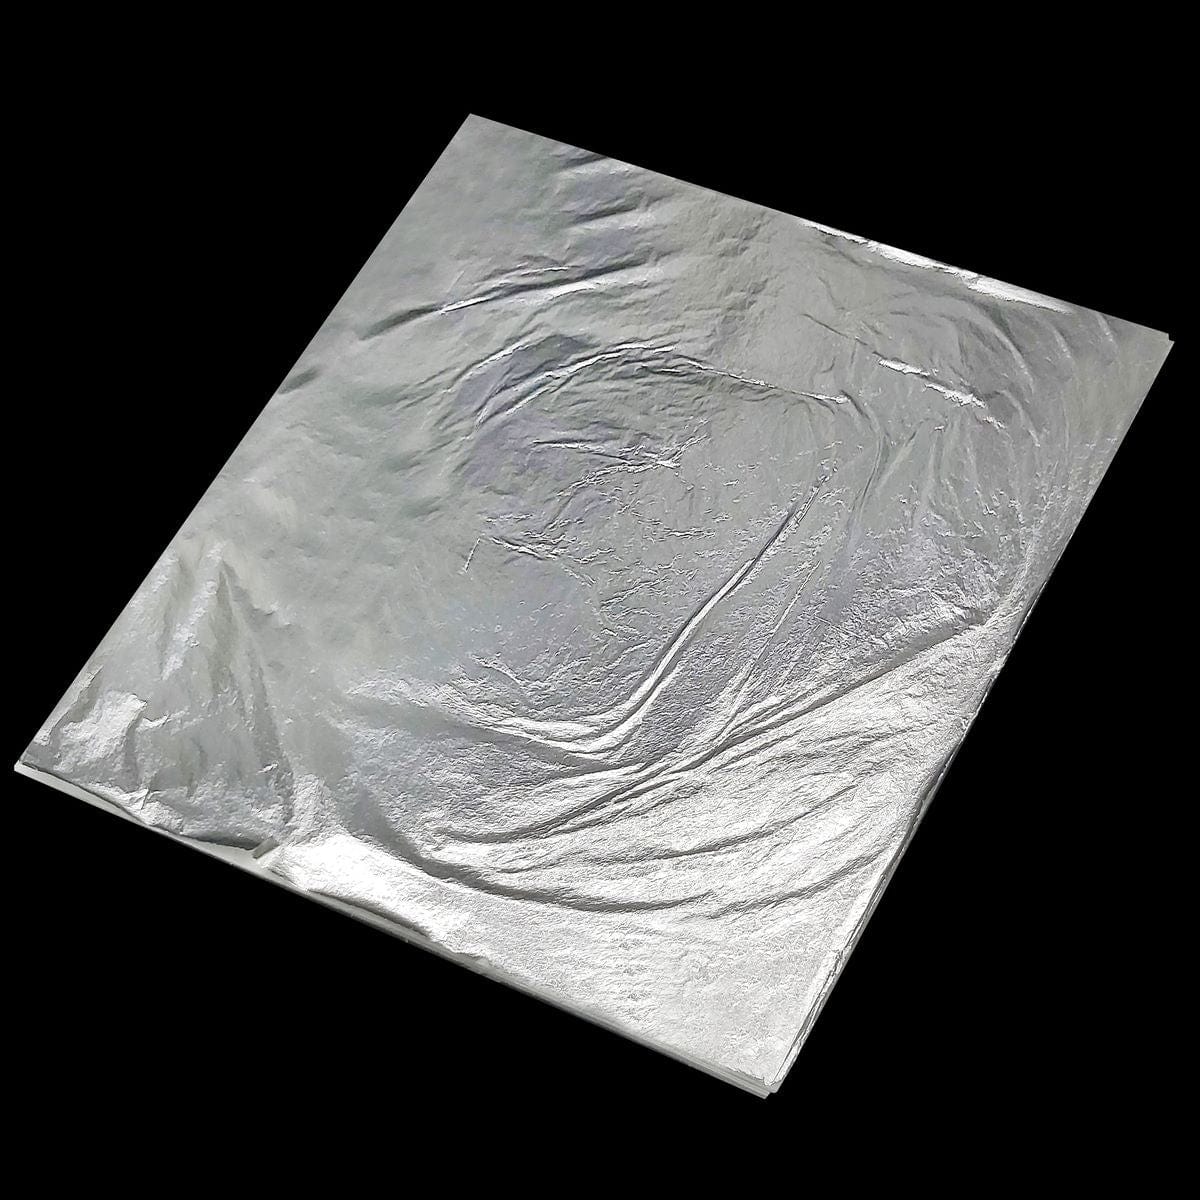 jags-mumbai Paper Jags Gilding Foil 6X6 Inch Silver